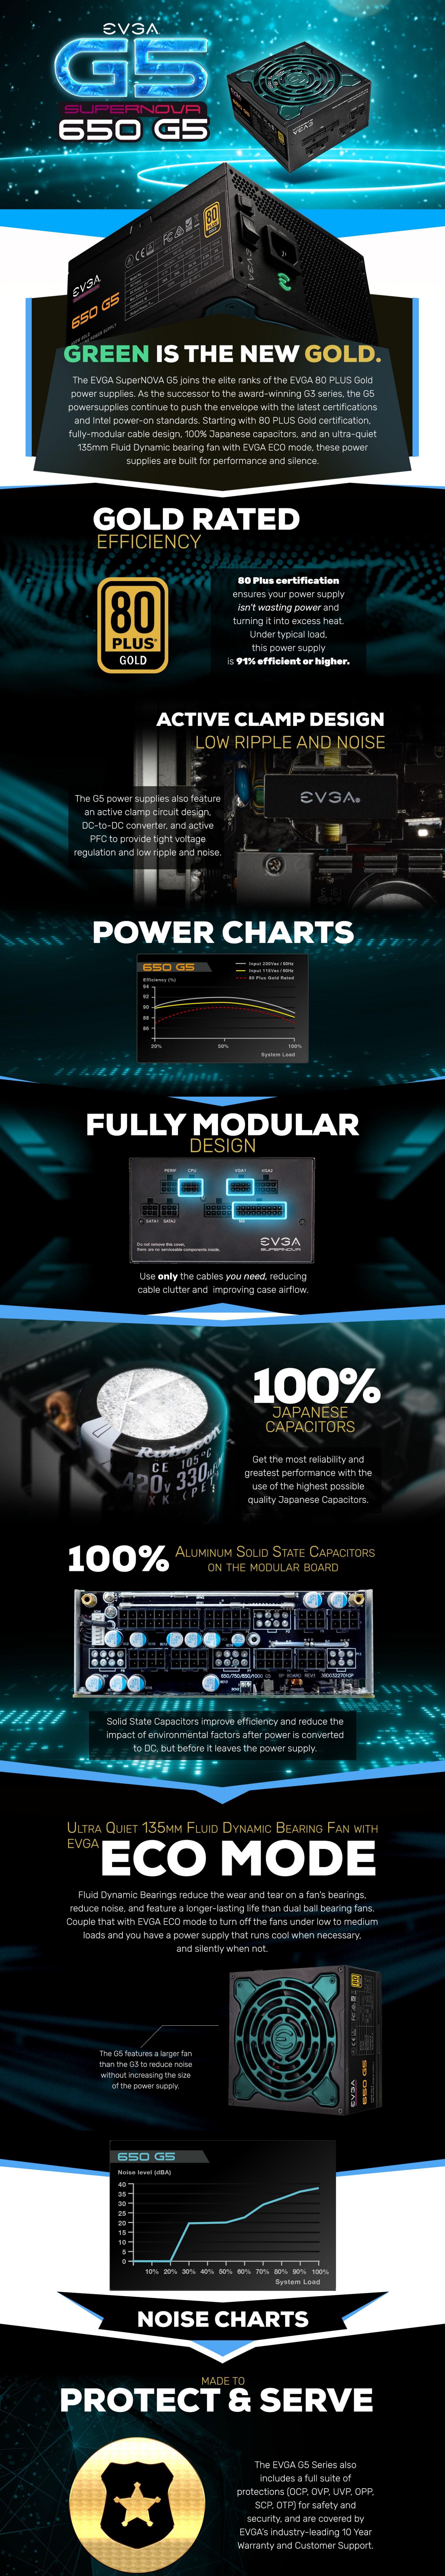 A large marketing image providing additional information about the product EVGA SuperNOVA 650 G5 650W Gold ATX Modular PSU - Additional alt info not provided